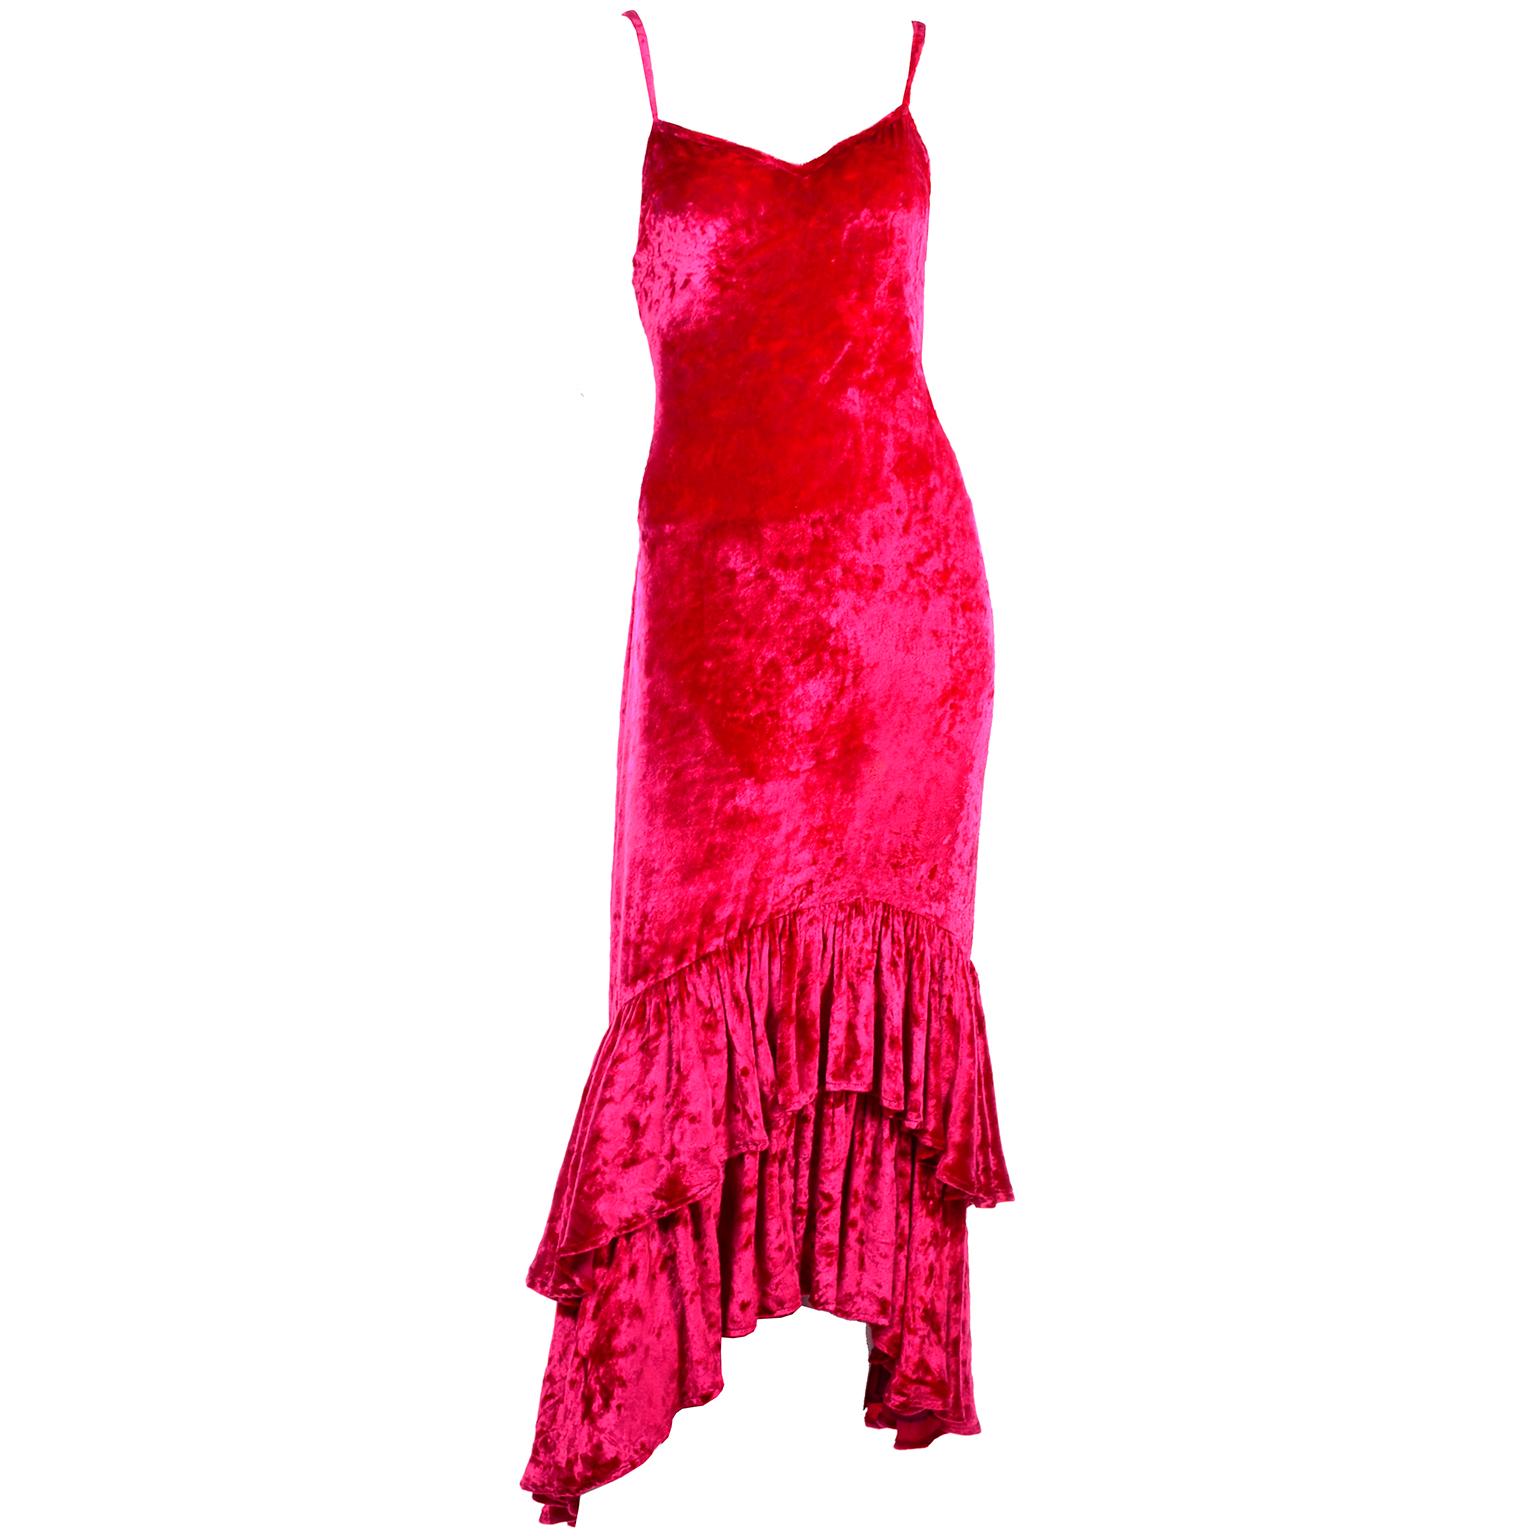 Sonia Rykiel Vintage Raspberry Red Crushed Velvet Dress W/ Ruffled High Low Hem